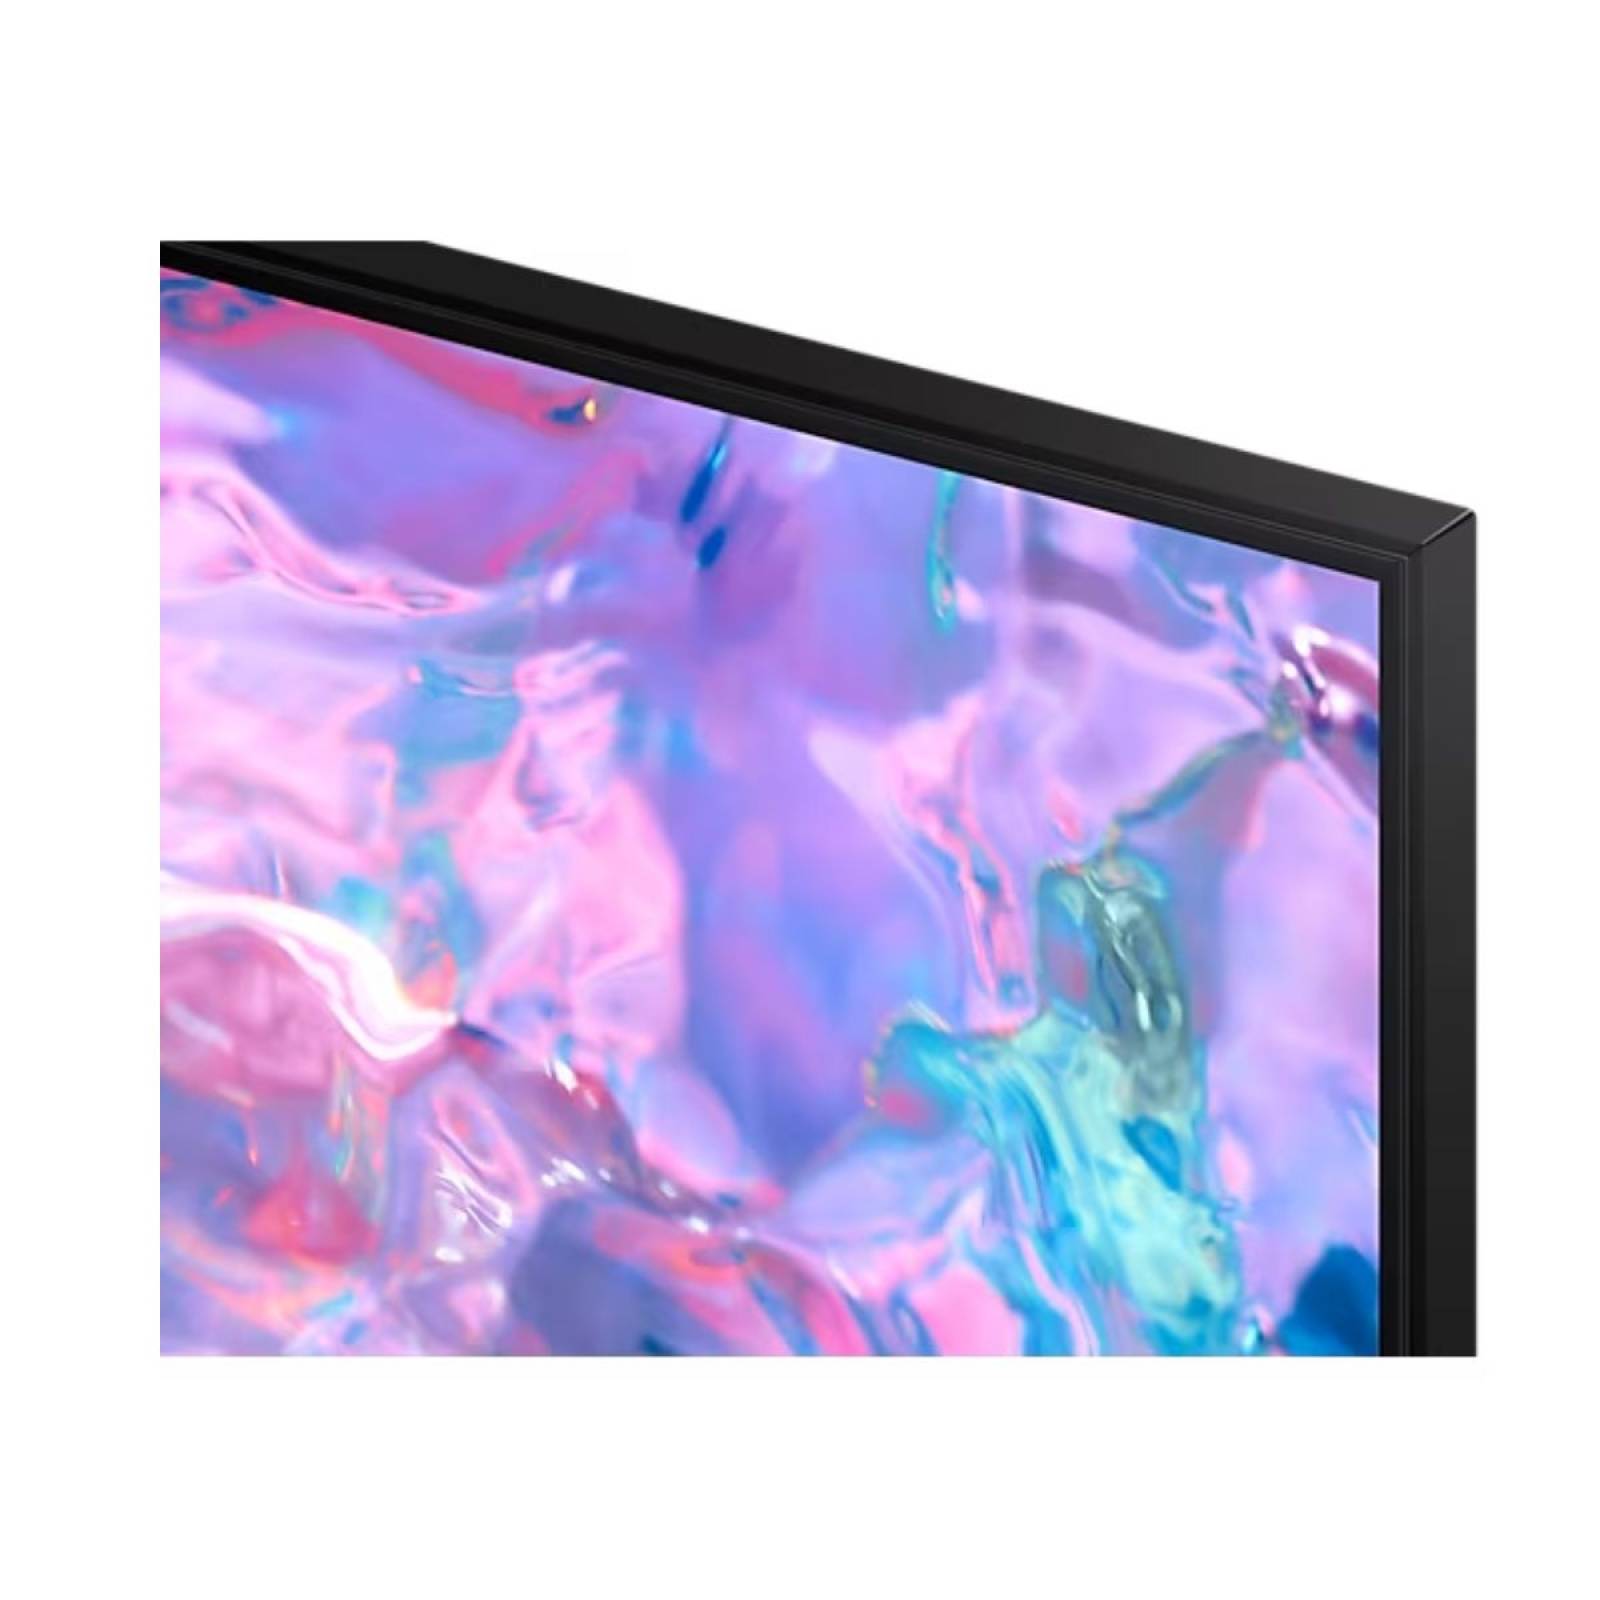 Pantalla Smart Tv 85 Pulgadas 4k Samsung Crystal Uhd